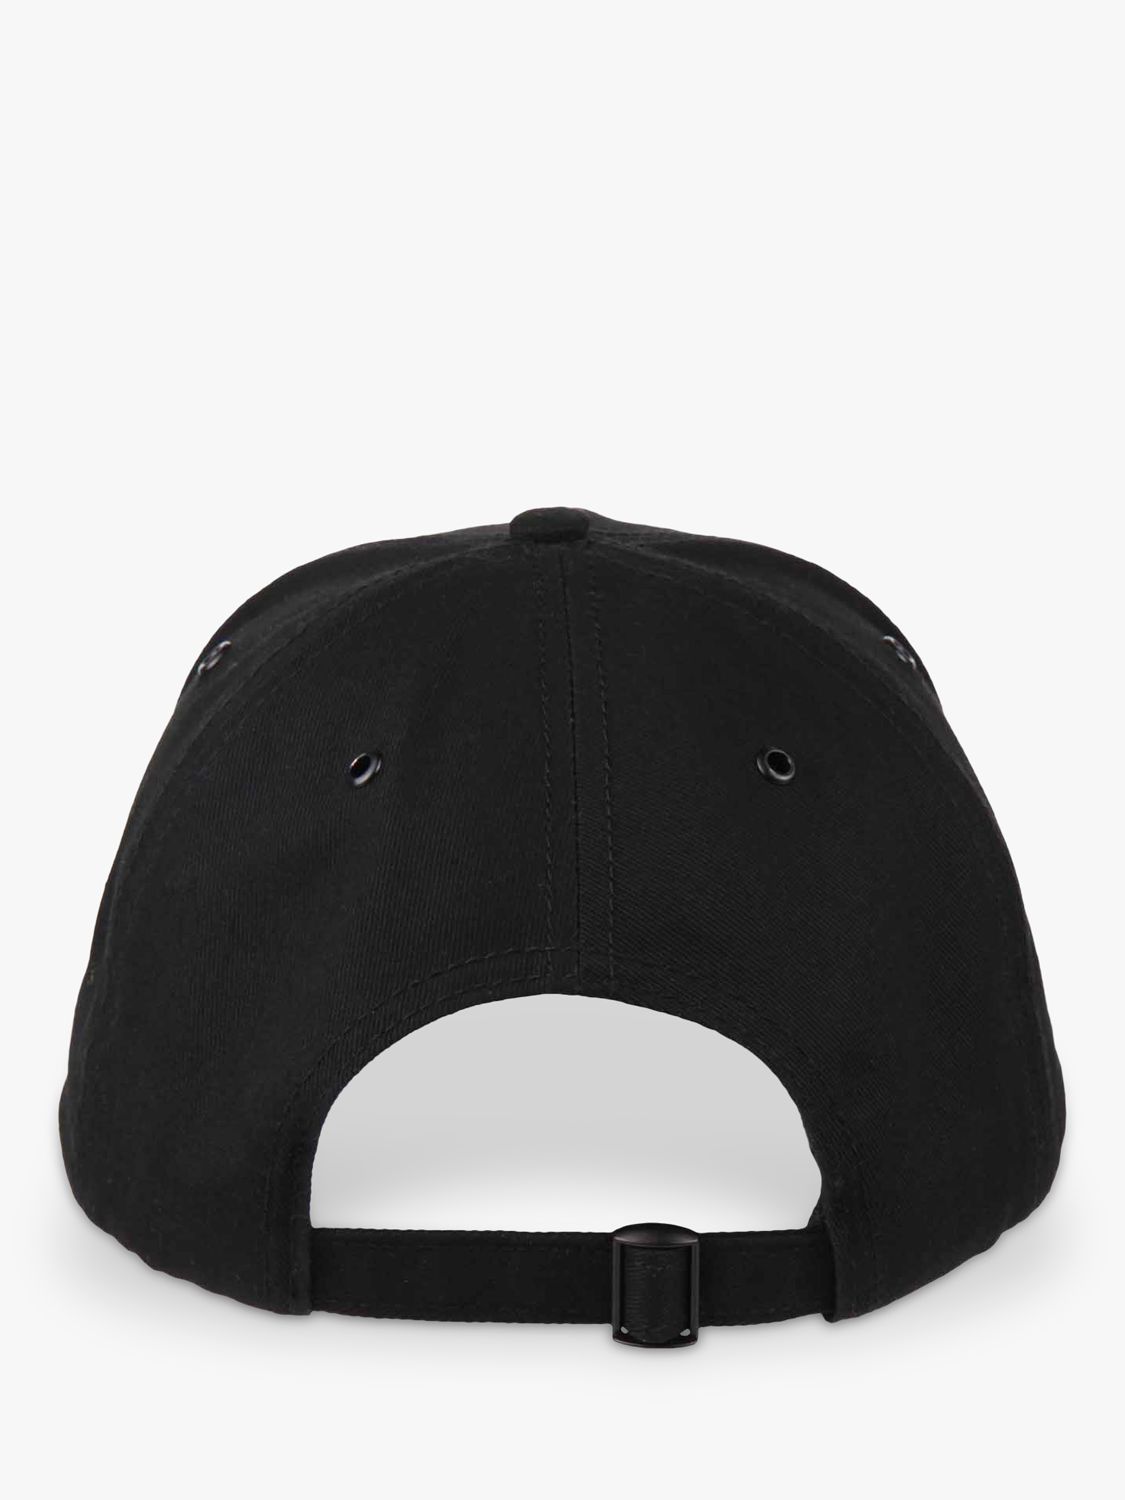 LUKE 1977 Provence Baseball Cap, Black, One Size